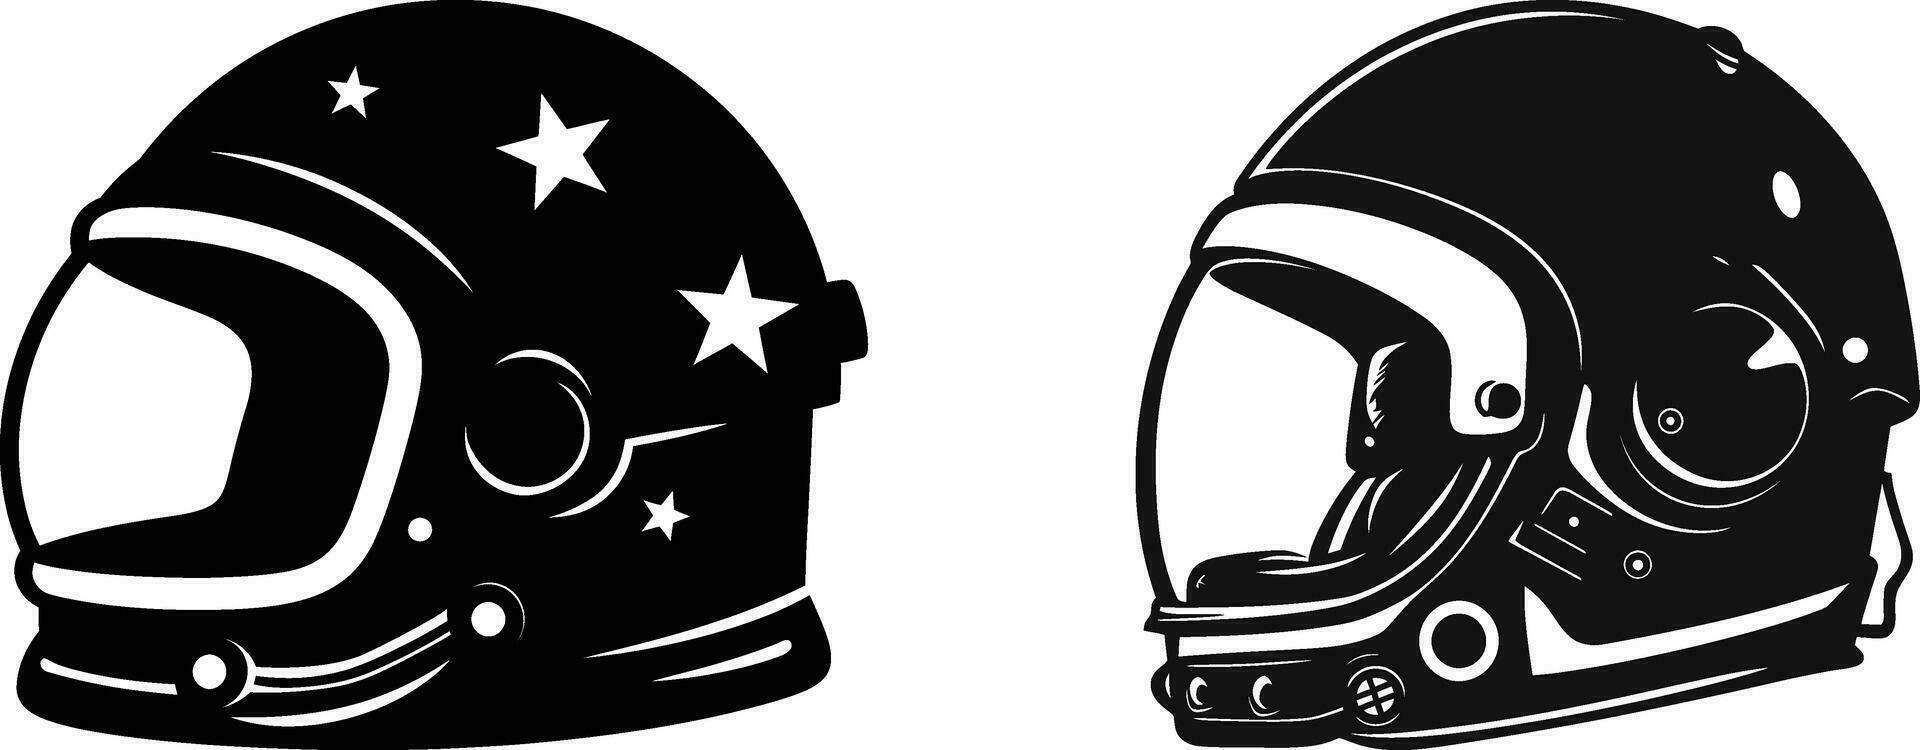 Silhouette of the Stars  Astronaut Helmet Design vector